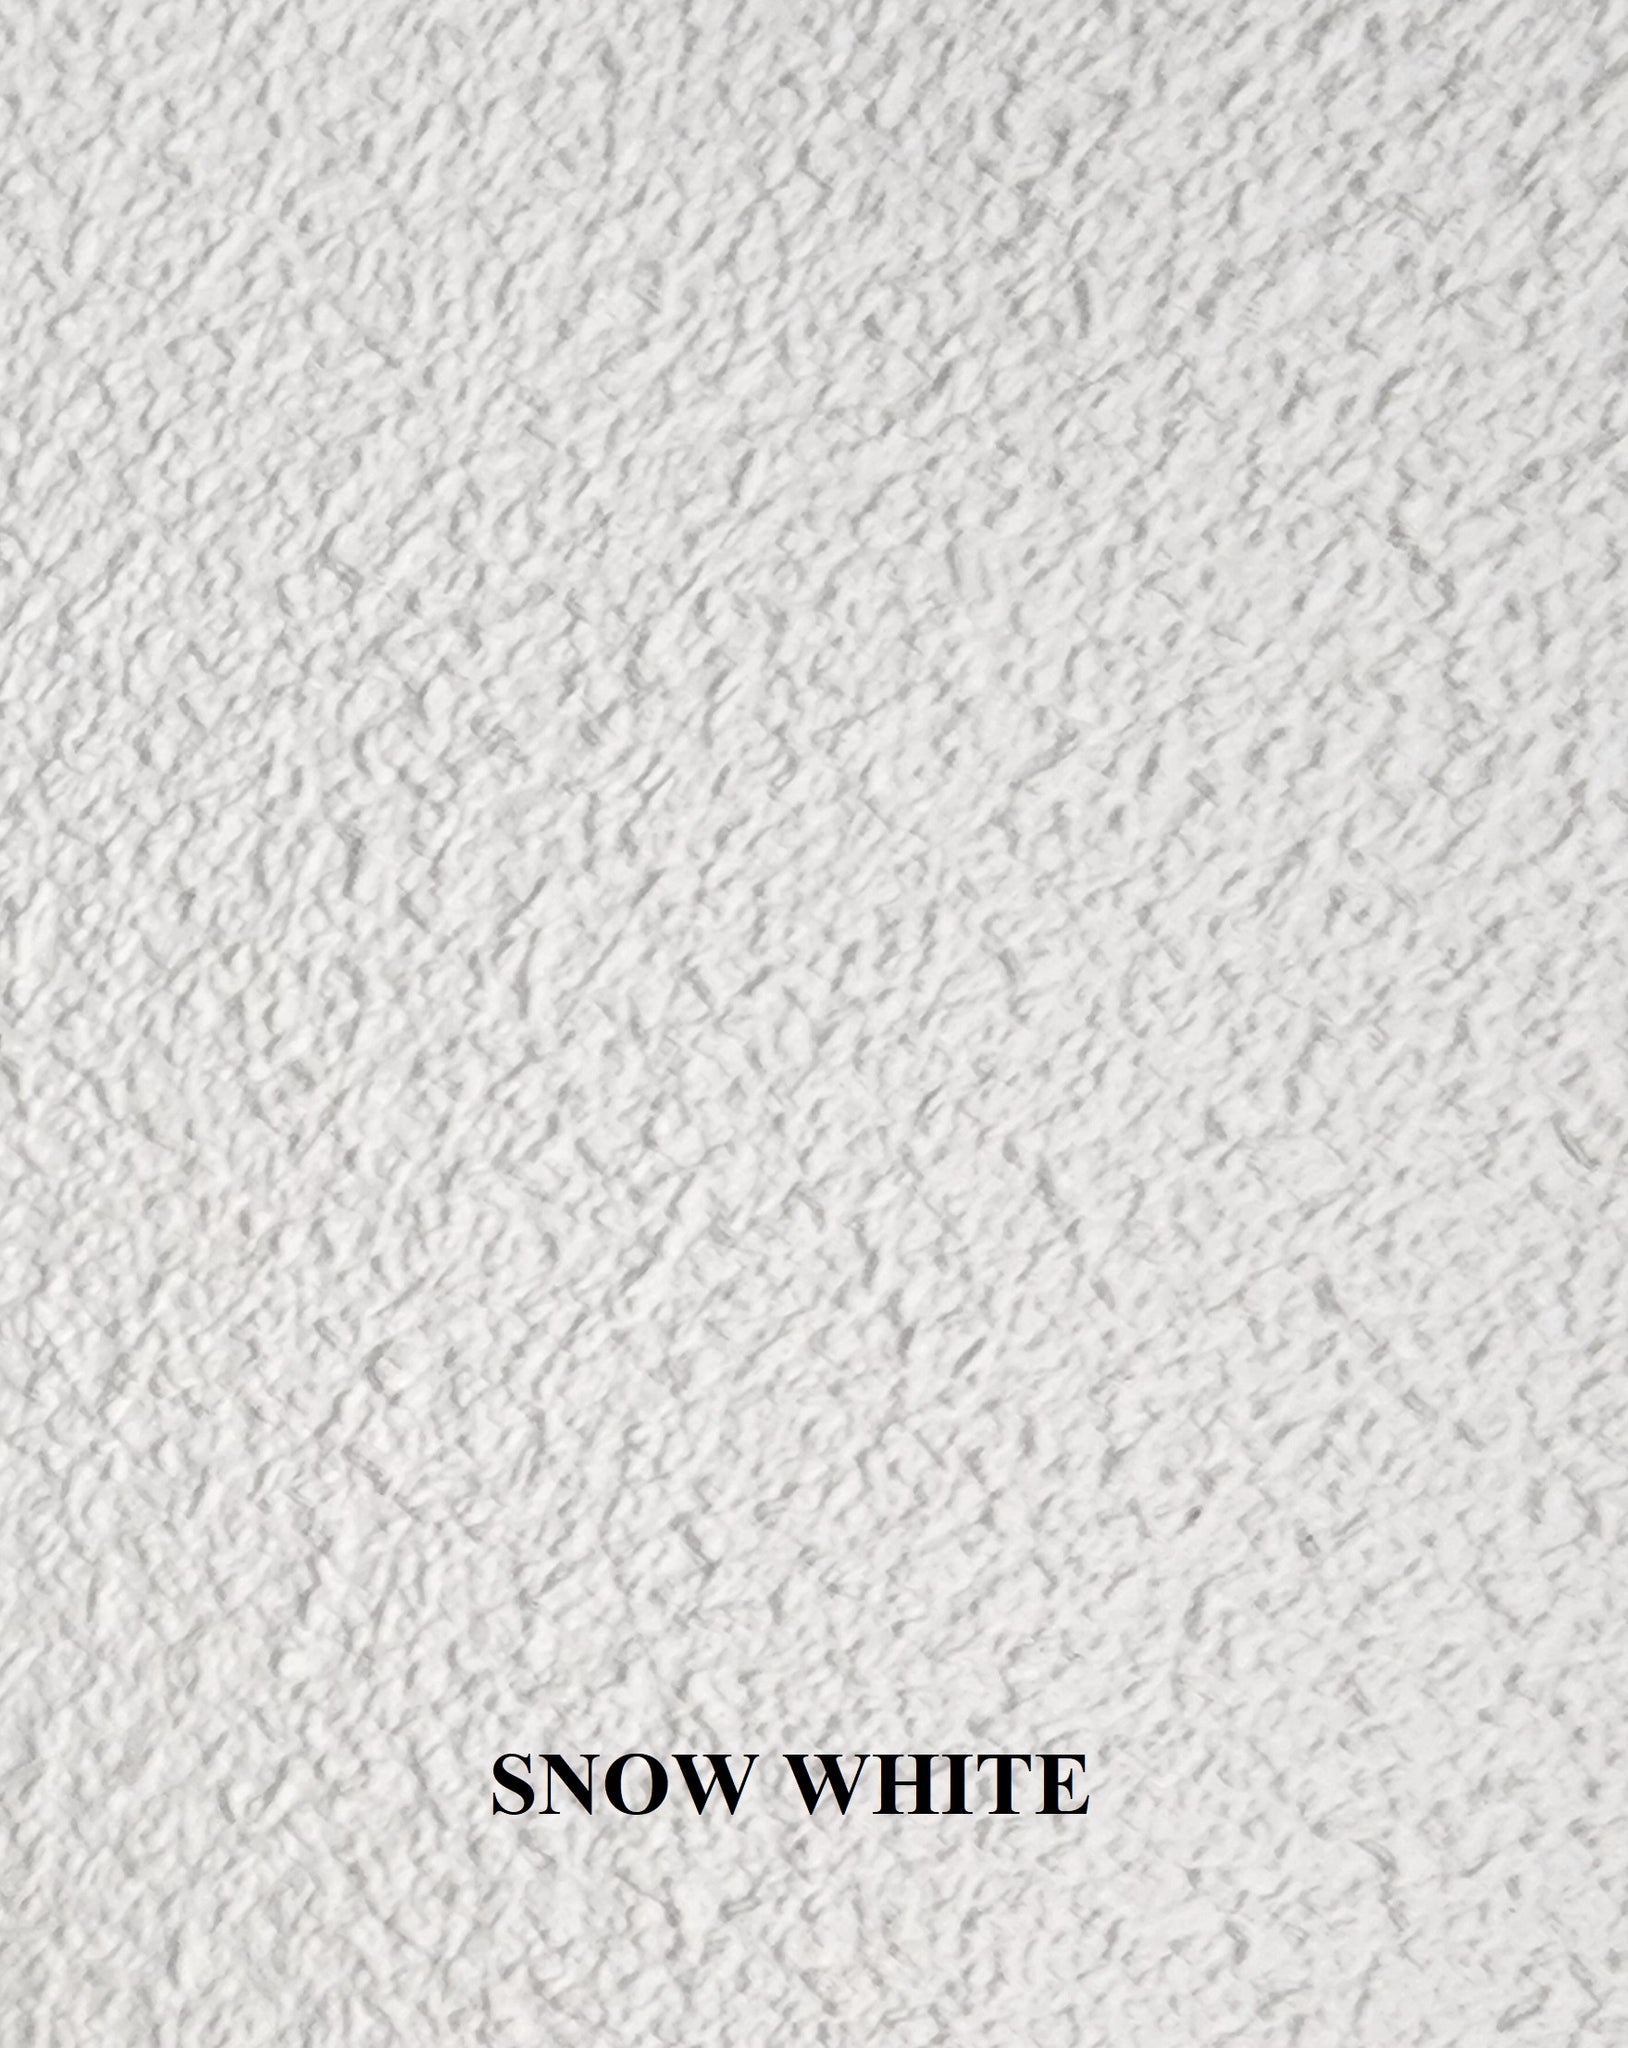 Snowblower Mats - Winkler Canvas